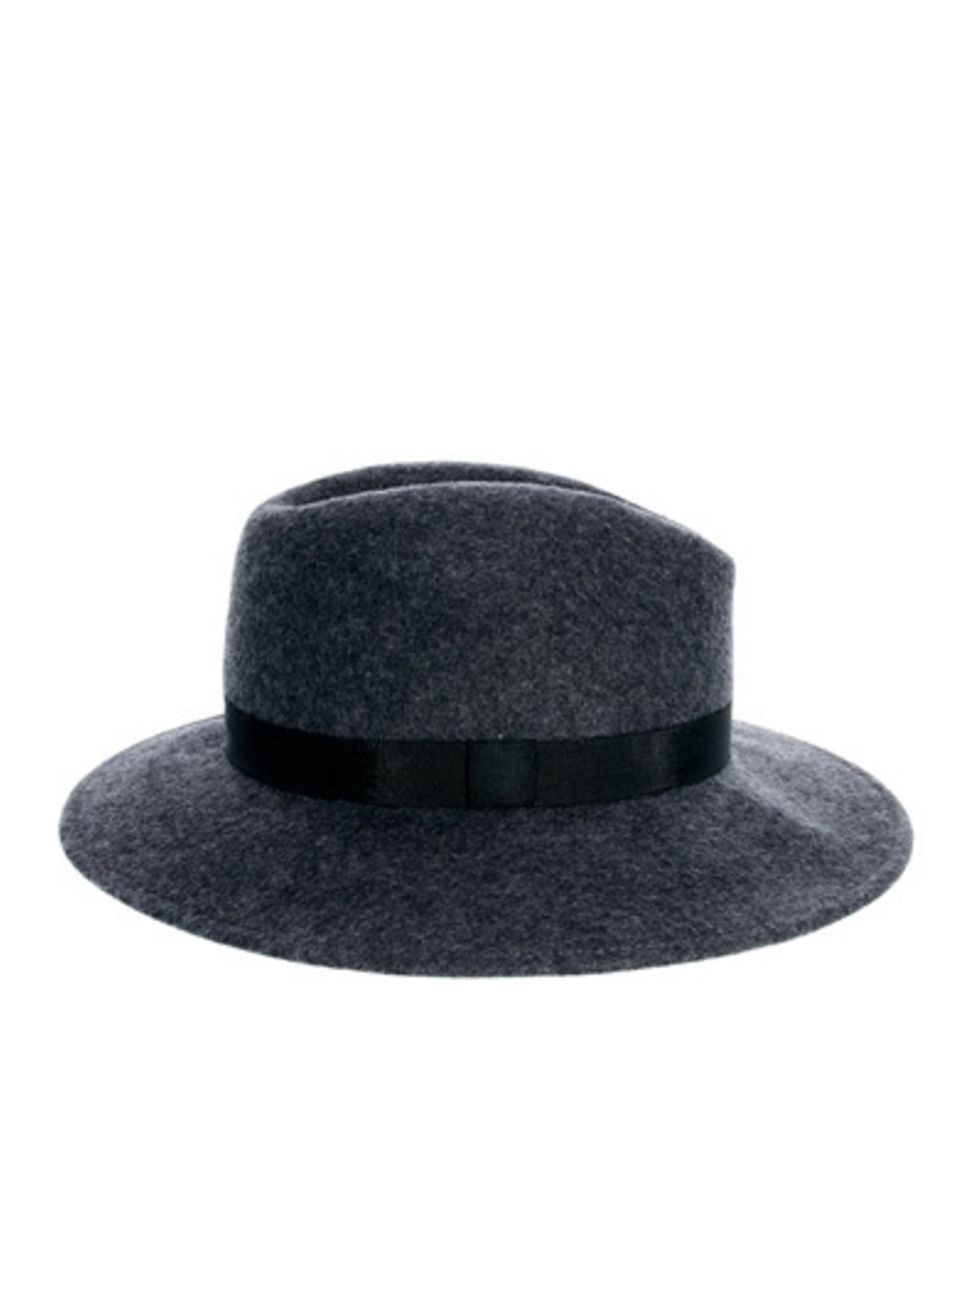 Hat, Headgear, Costume hat, Costume accessory, Black, Grey, Fedora, Bonnet, Costume, Sun hat, 